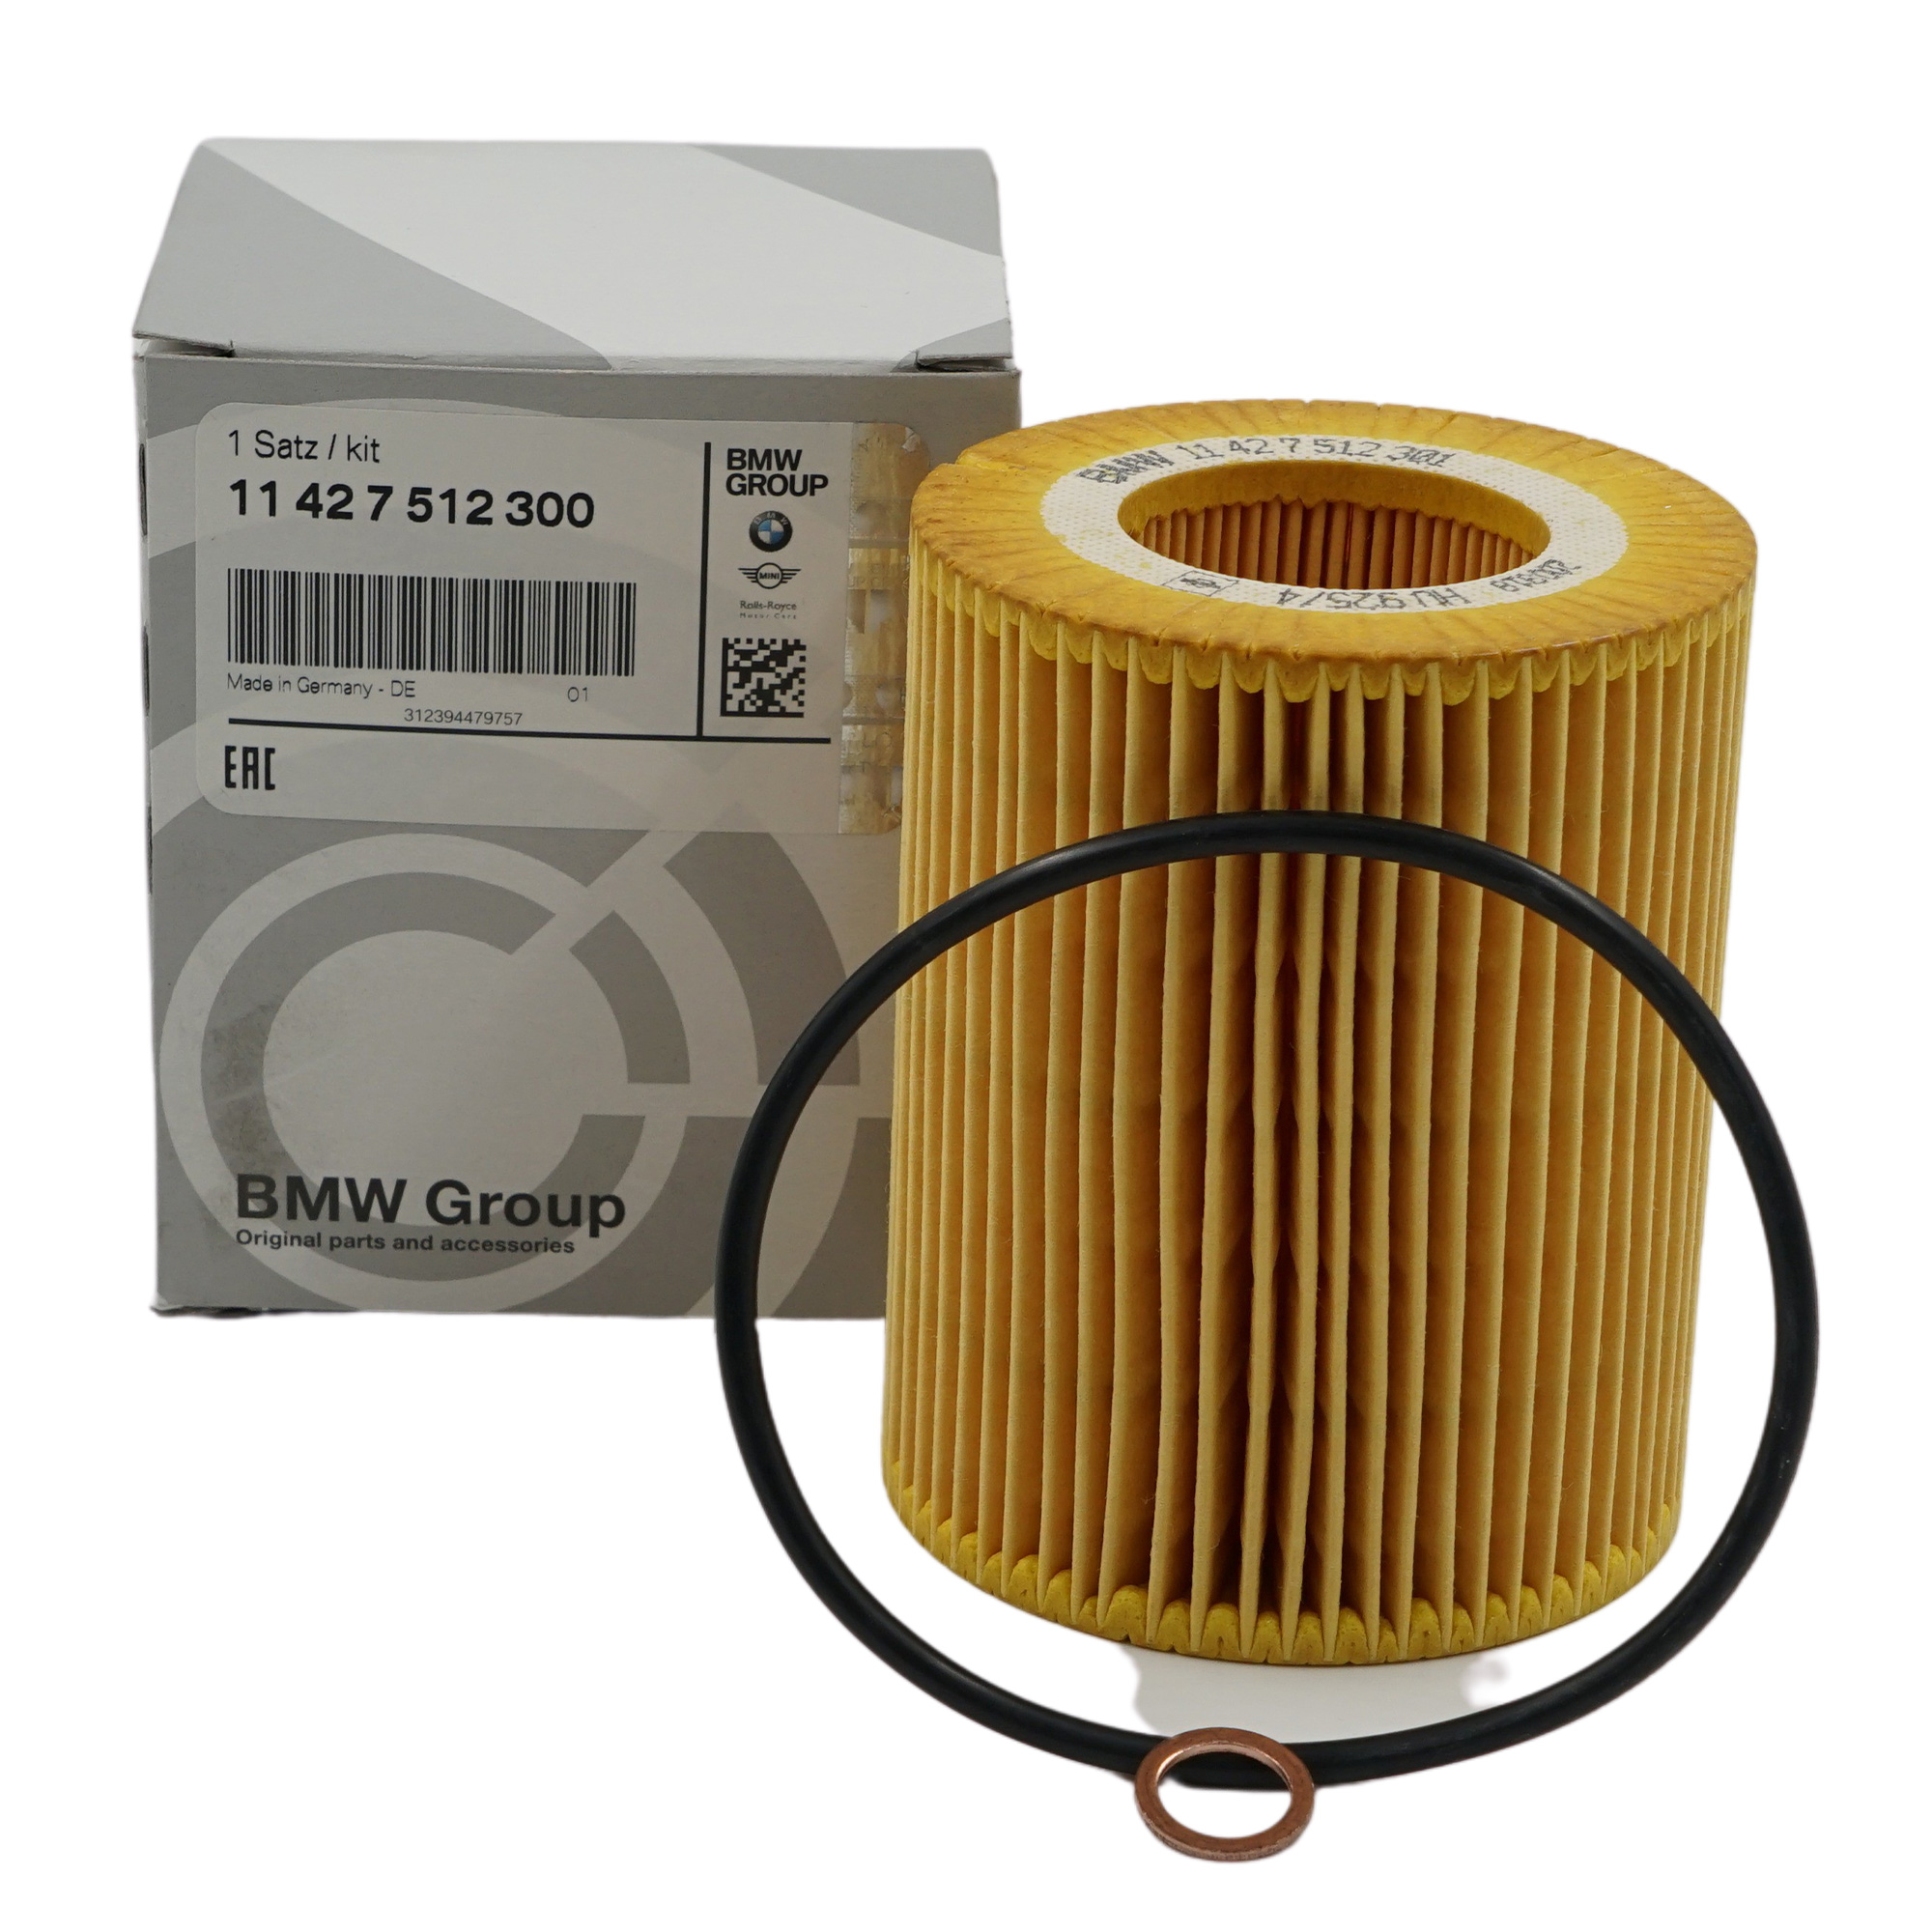 Original BMW Set oil-filter element (11427512300) | HUBAUER-Shop.de